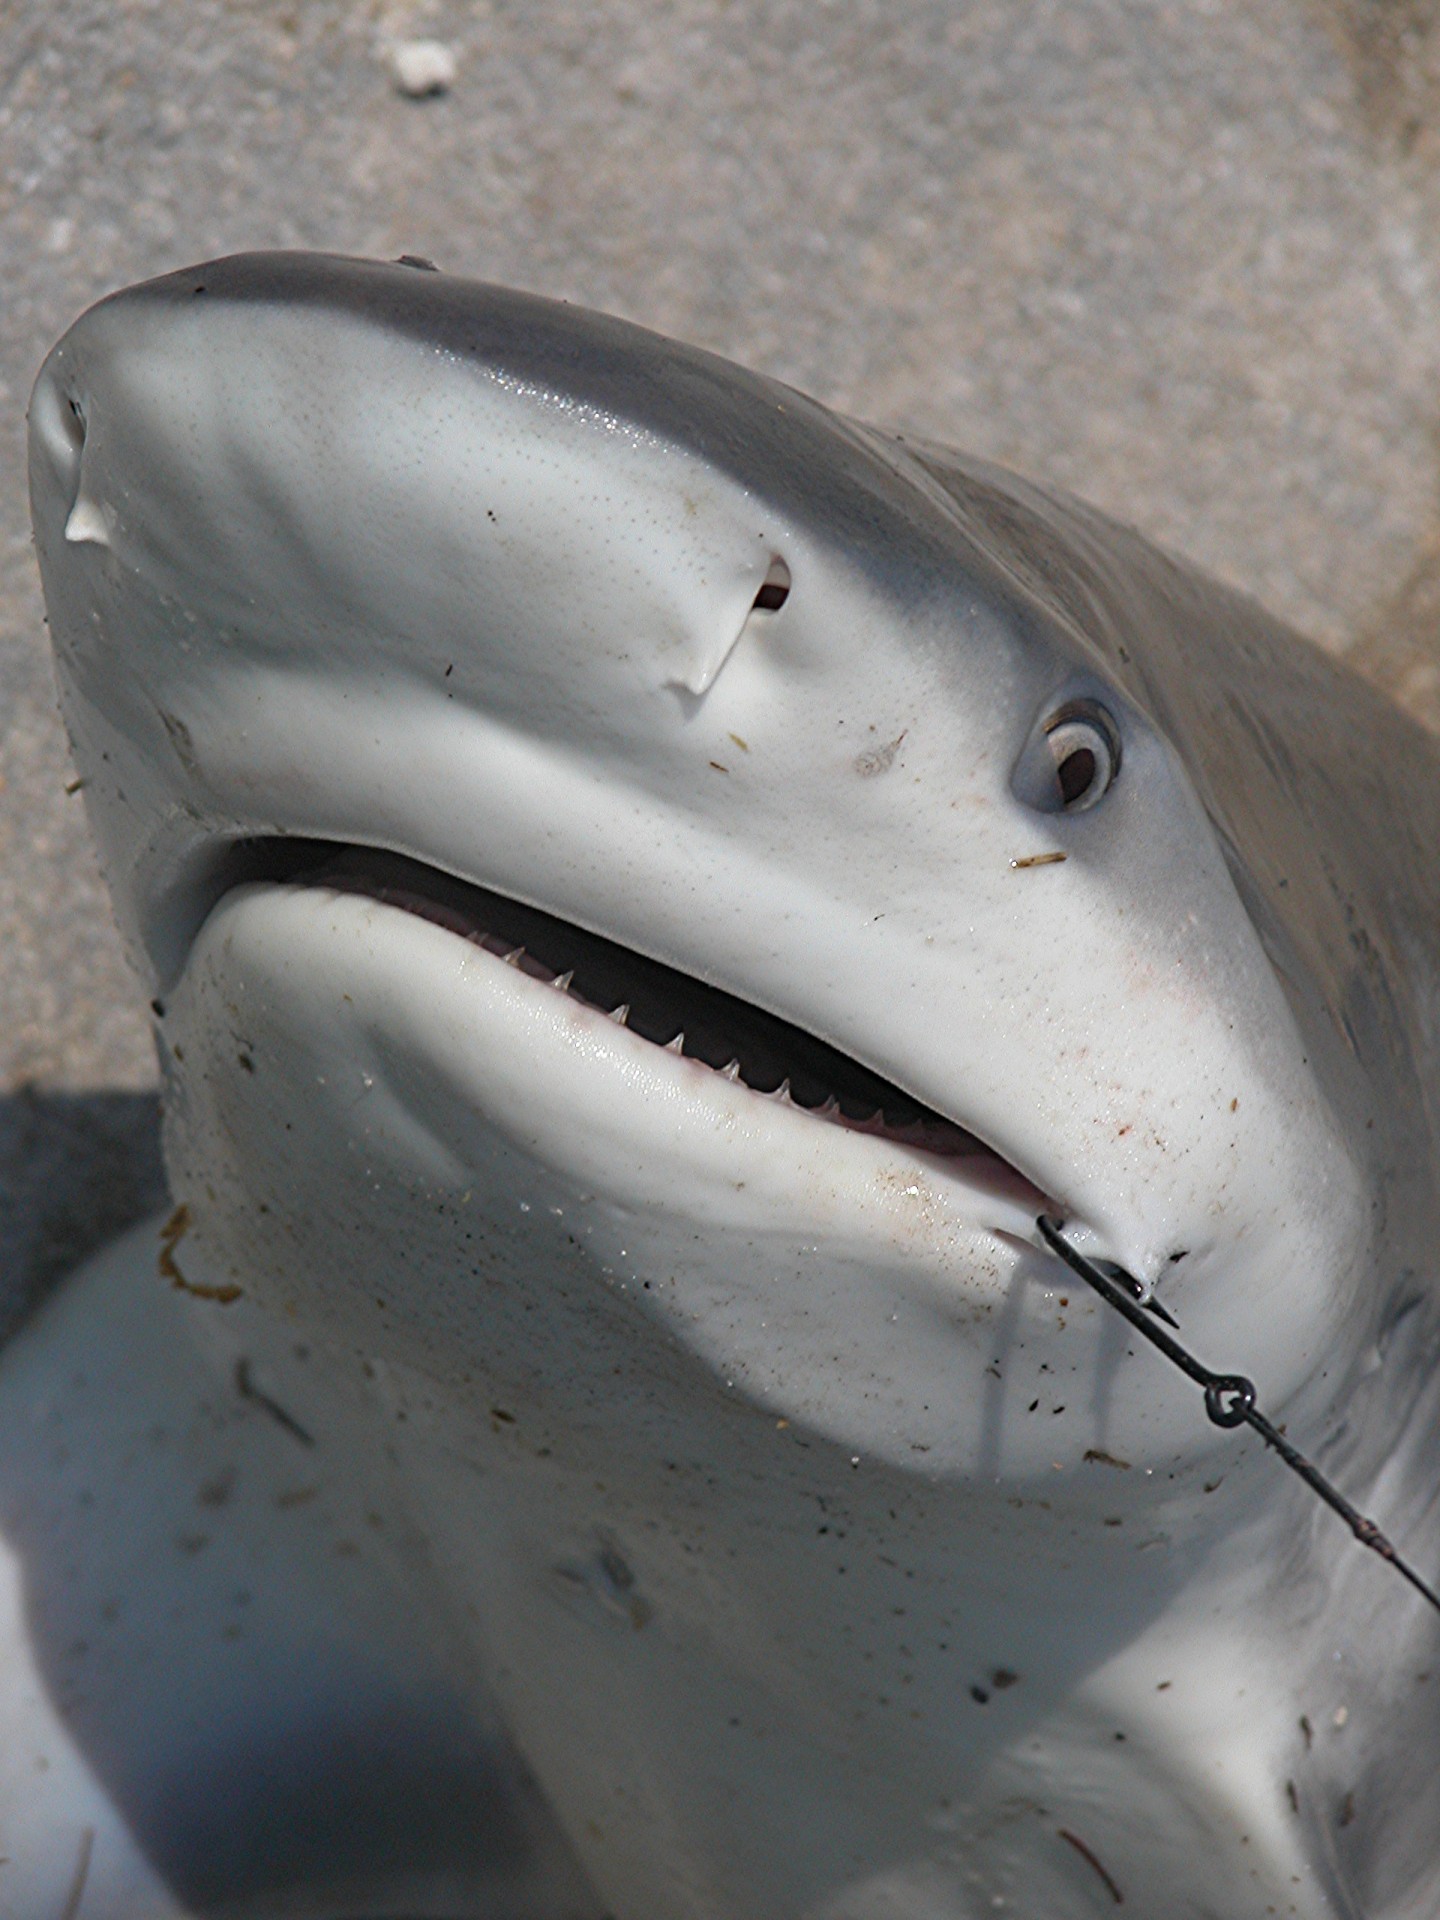 Shark Captura de lanzamiento Stock de Foto gratis - Public Domain Pictures